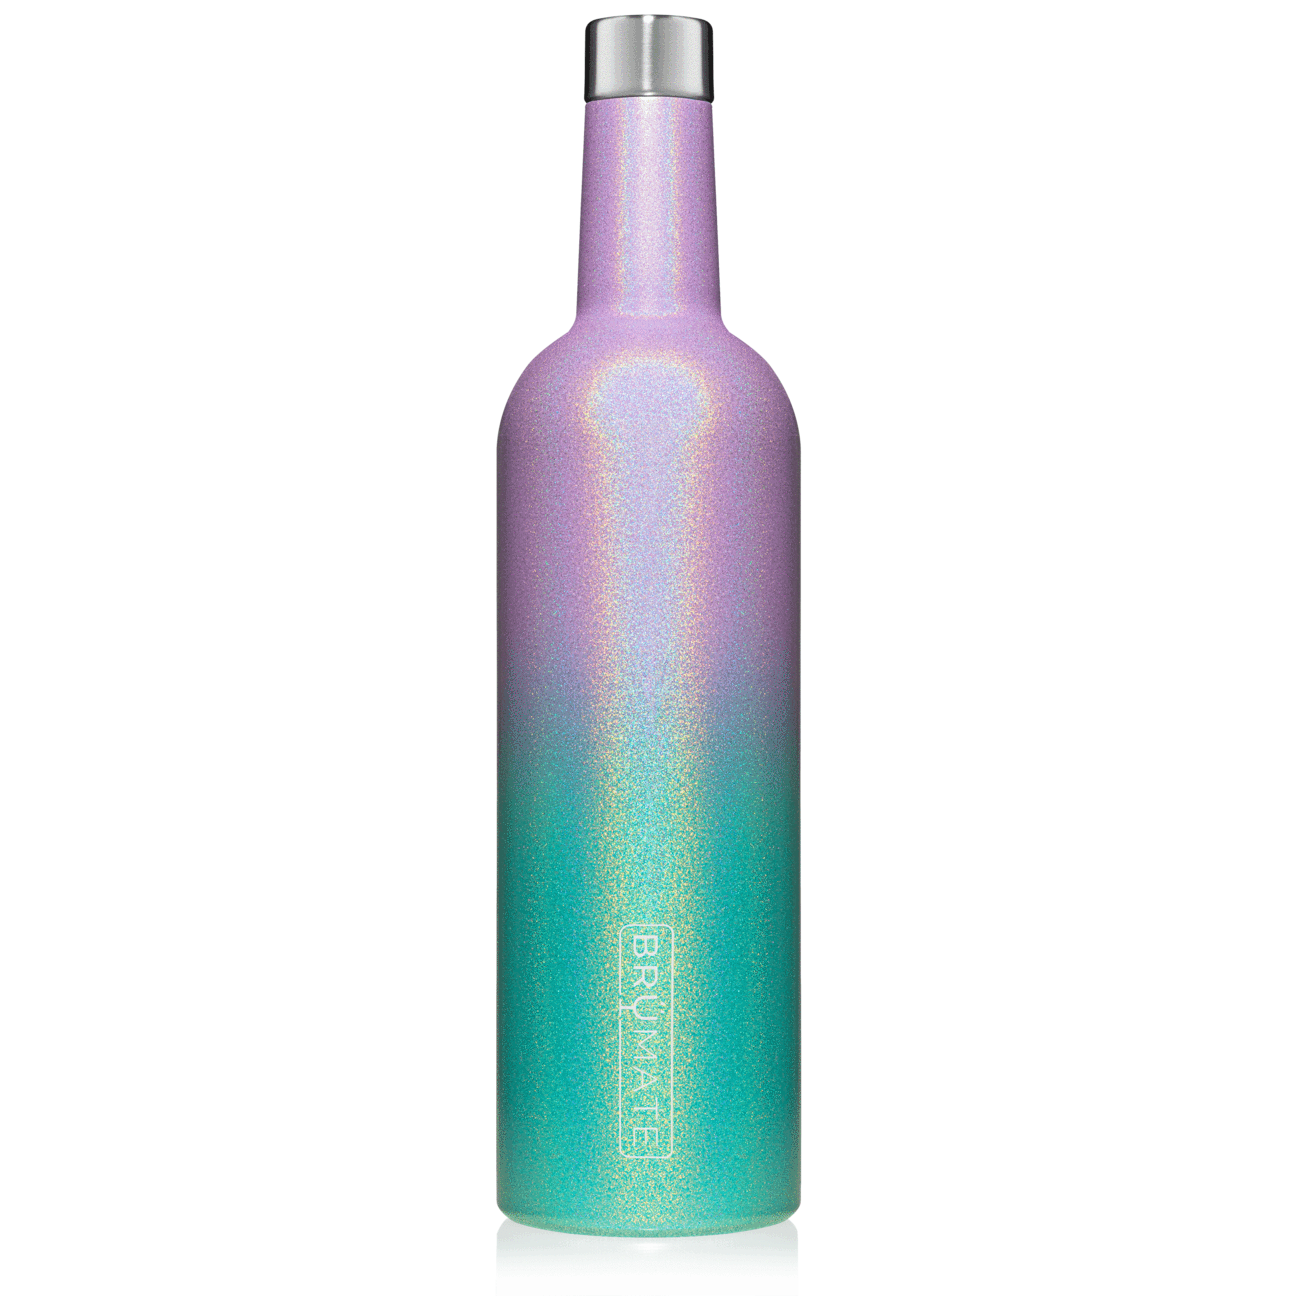 Brümate Winesulator - Glitter Mermaid    